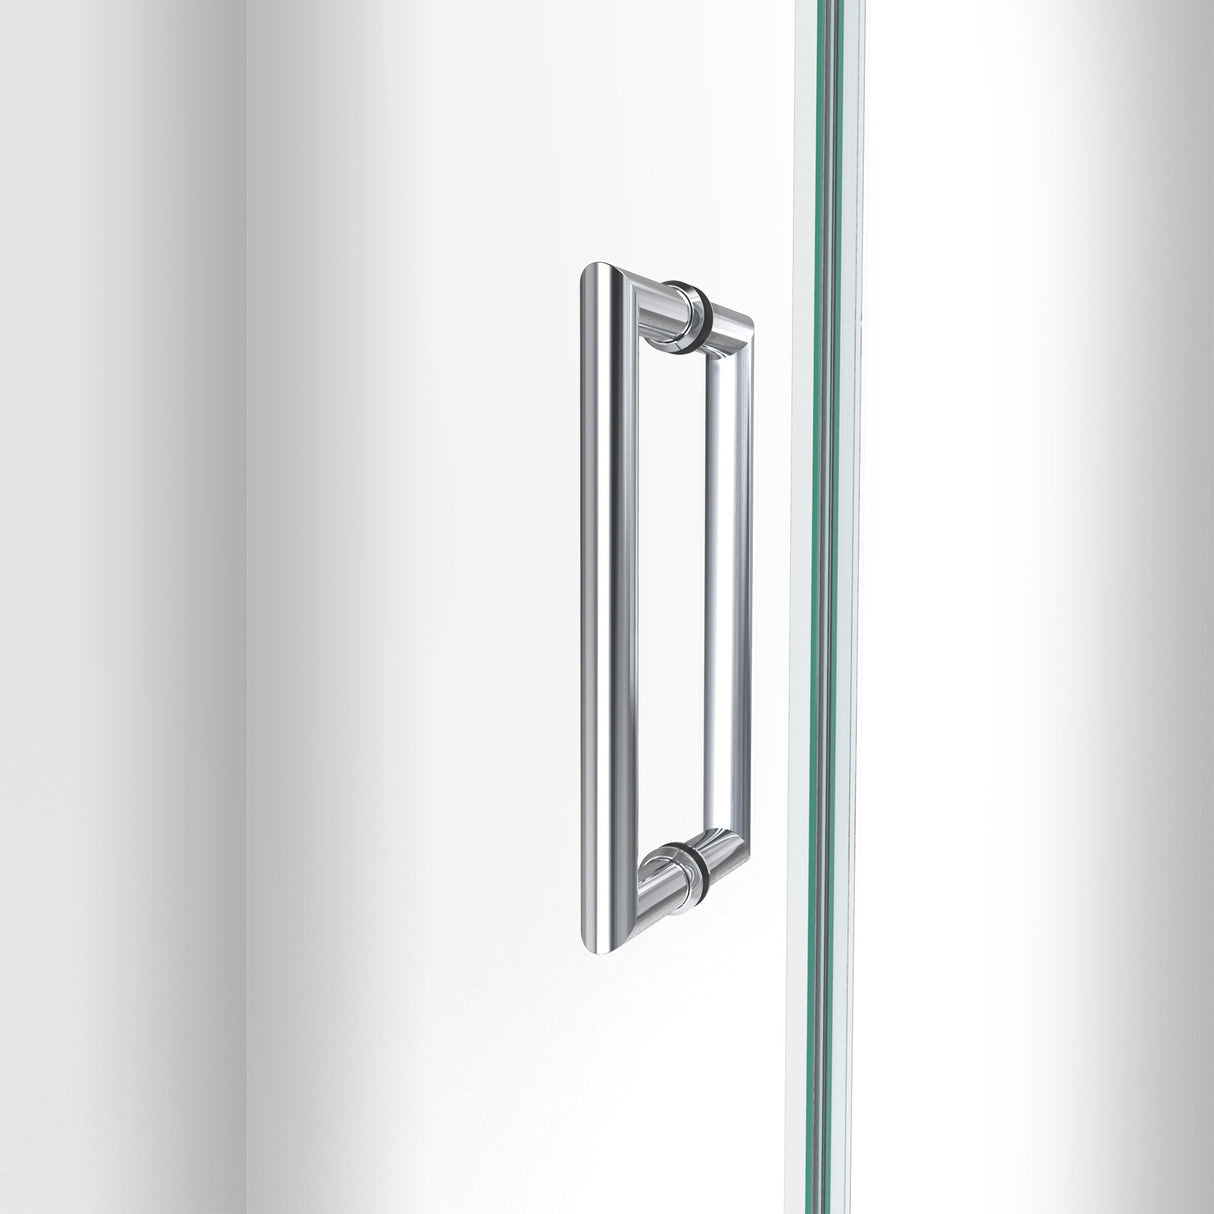 DreamLine Unidoor-LS 57-58 in. W x 72 in. H Frameless Hinged Shower Door with L-Bar in Chrome